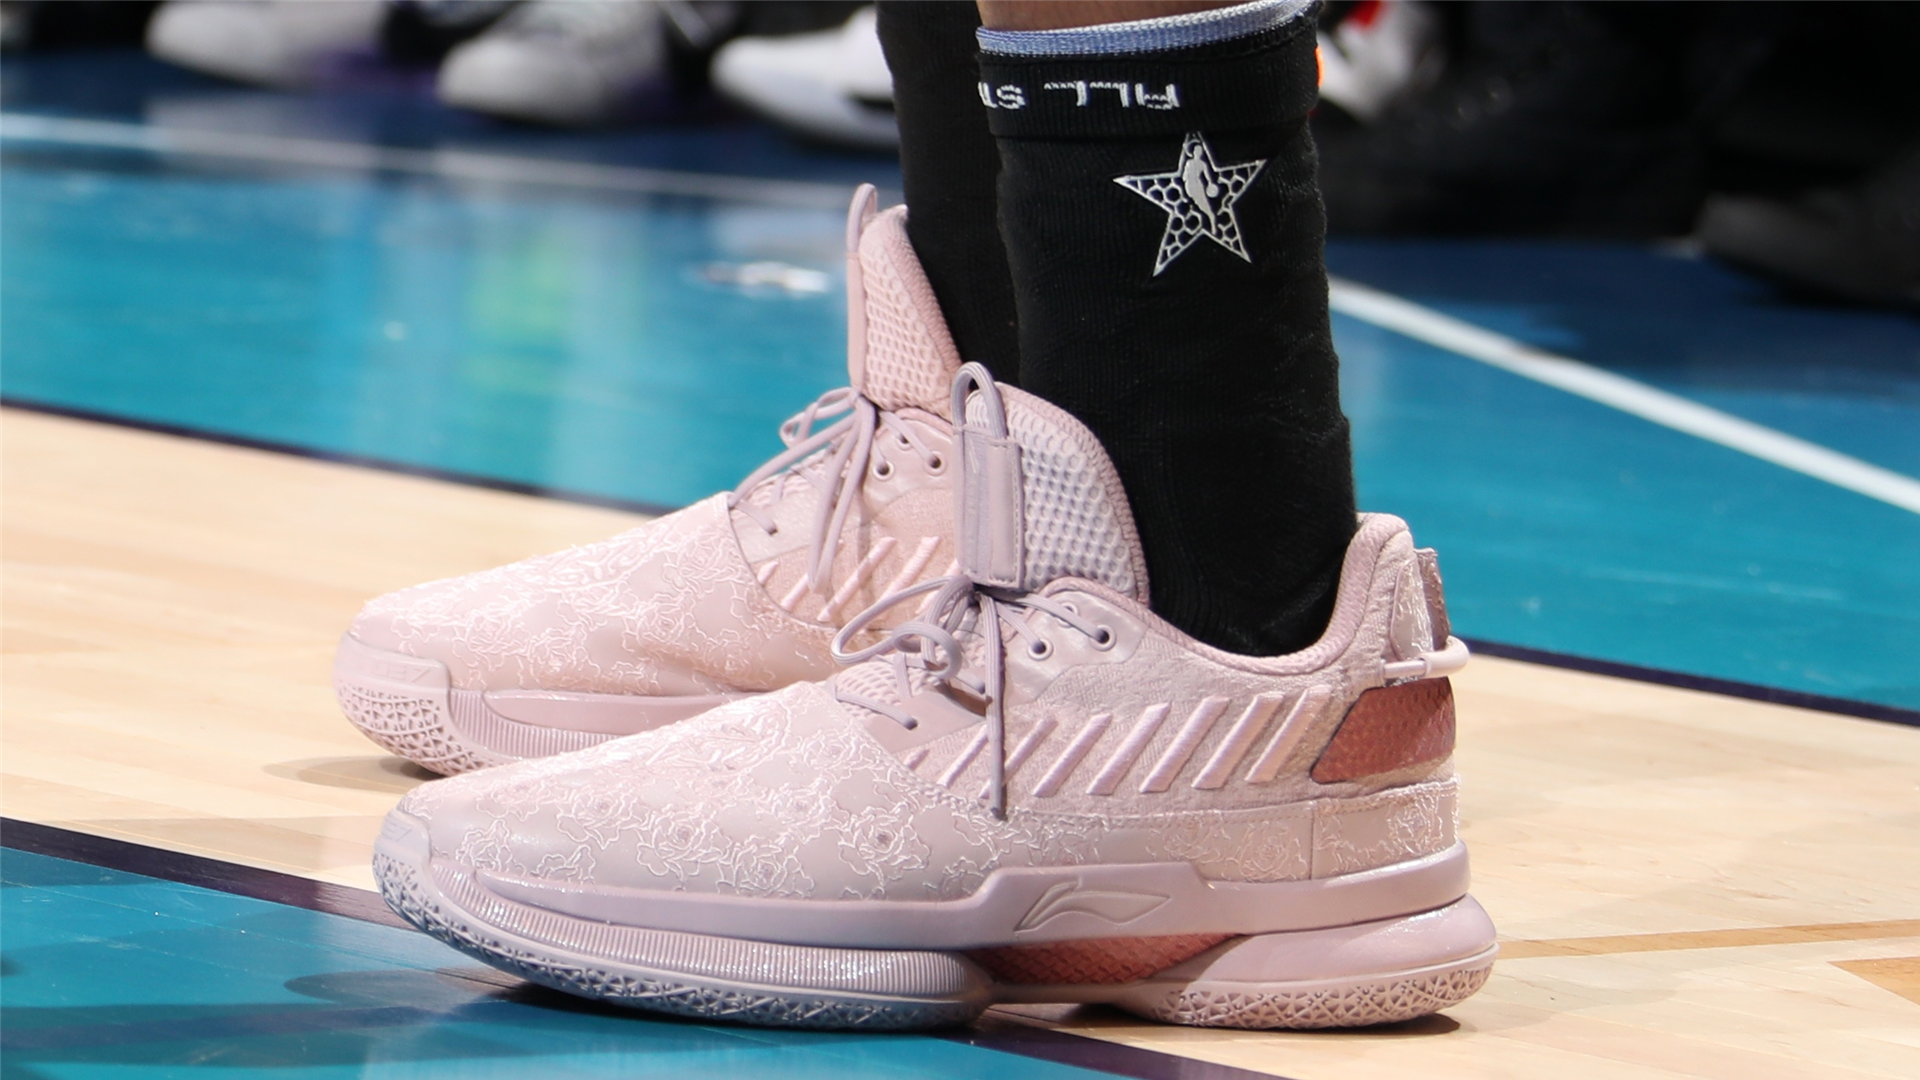 NBA All-Star 2019: Every sneaker worn 